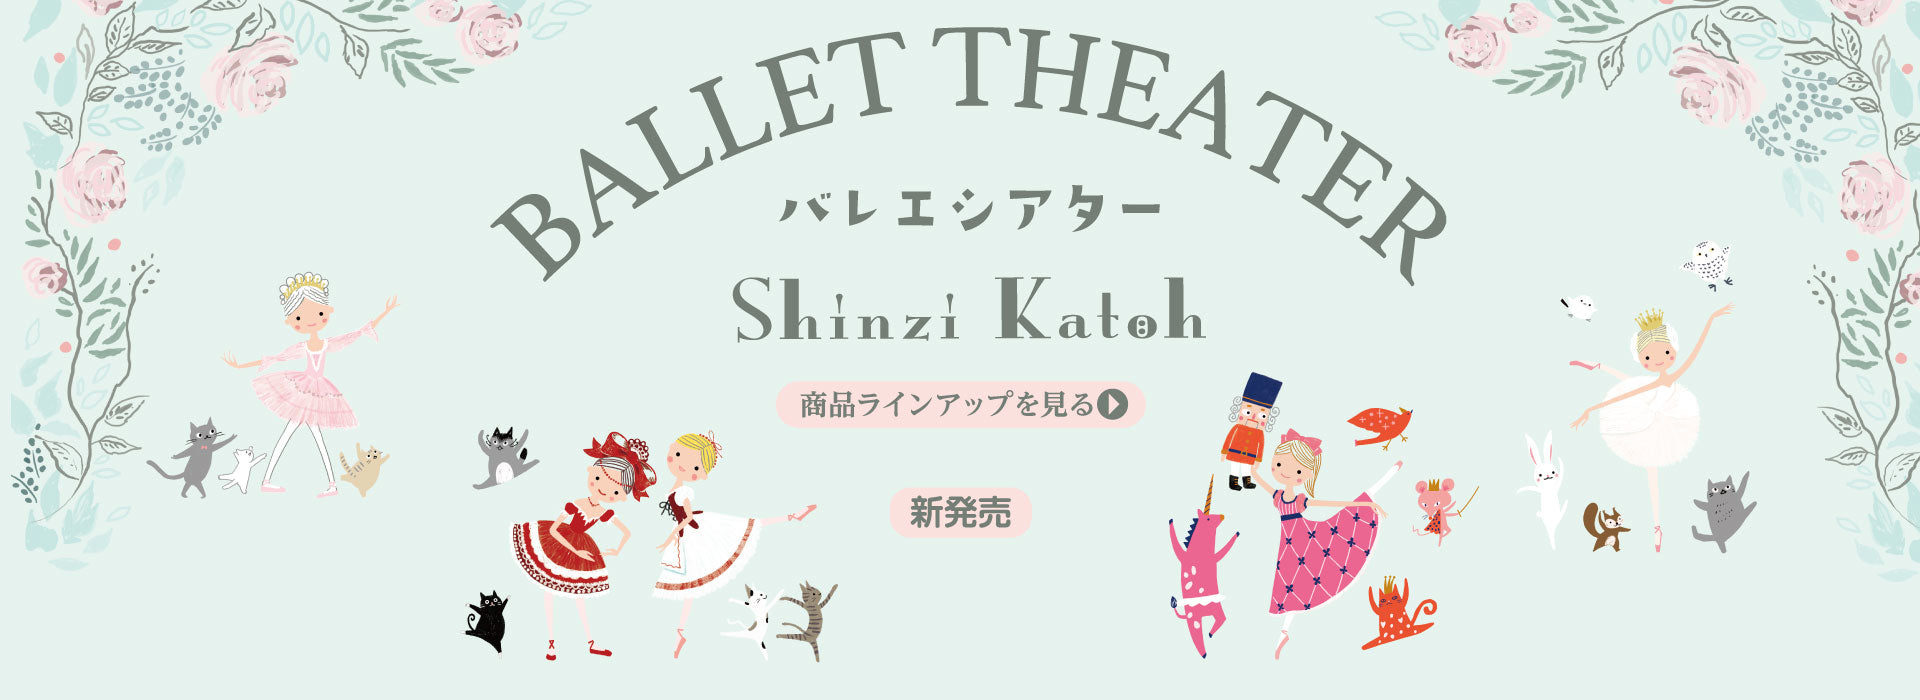 ballet_theater